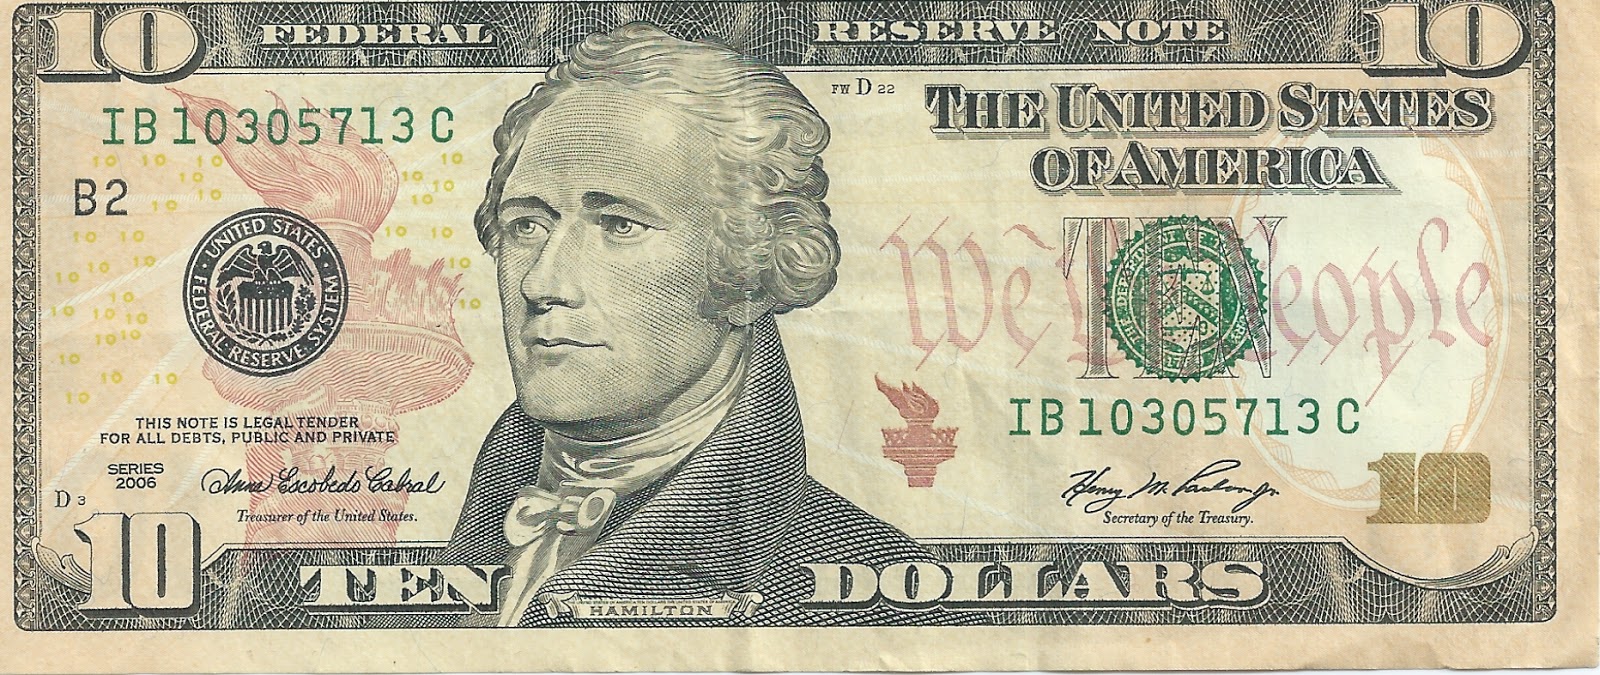 International Banknotes: 10 United States Dollars (USD), 2006